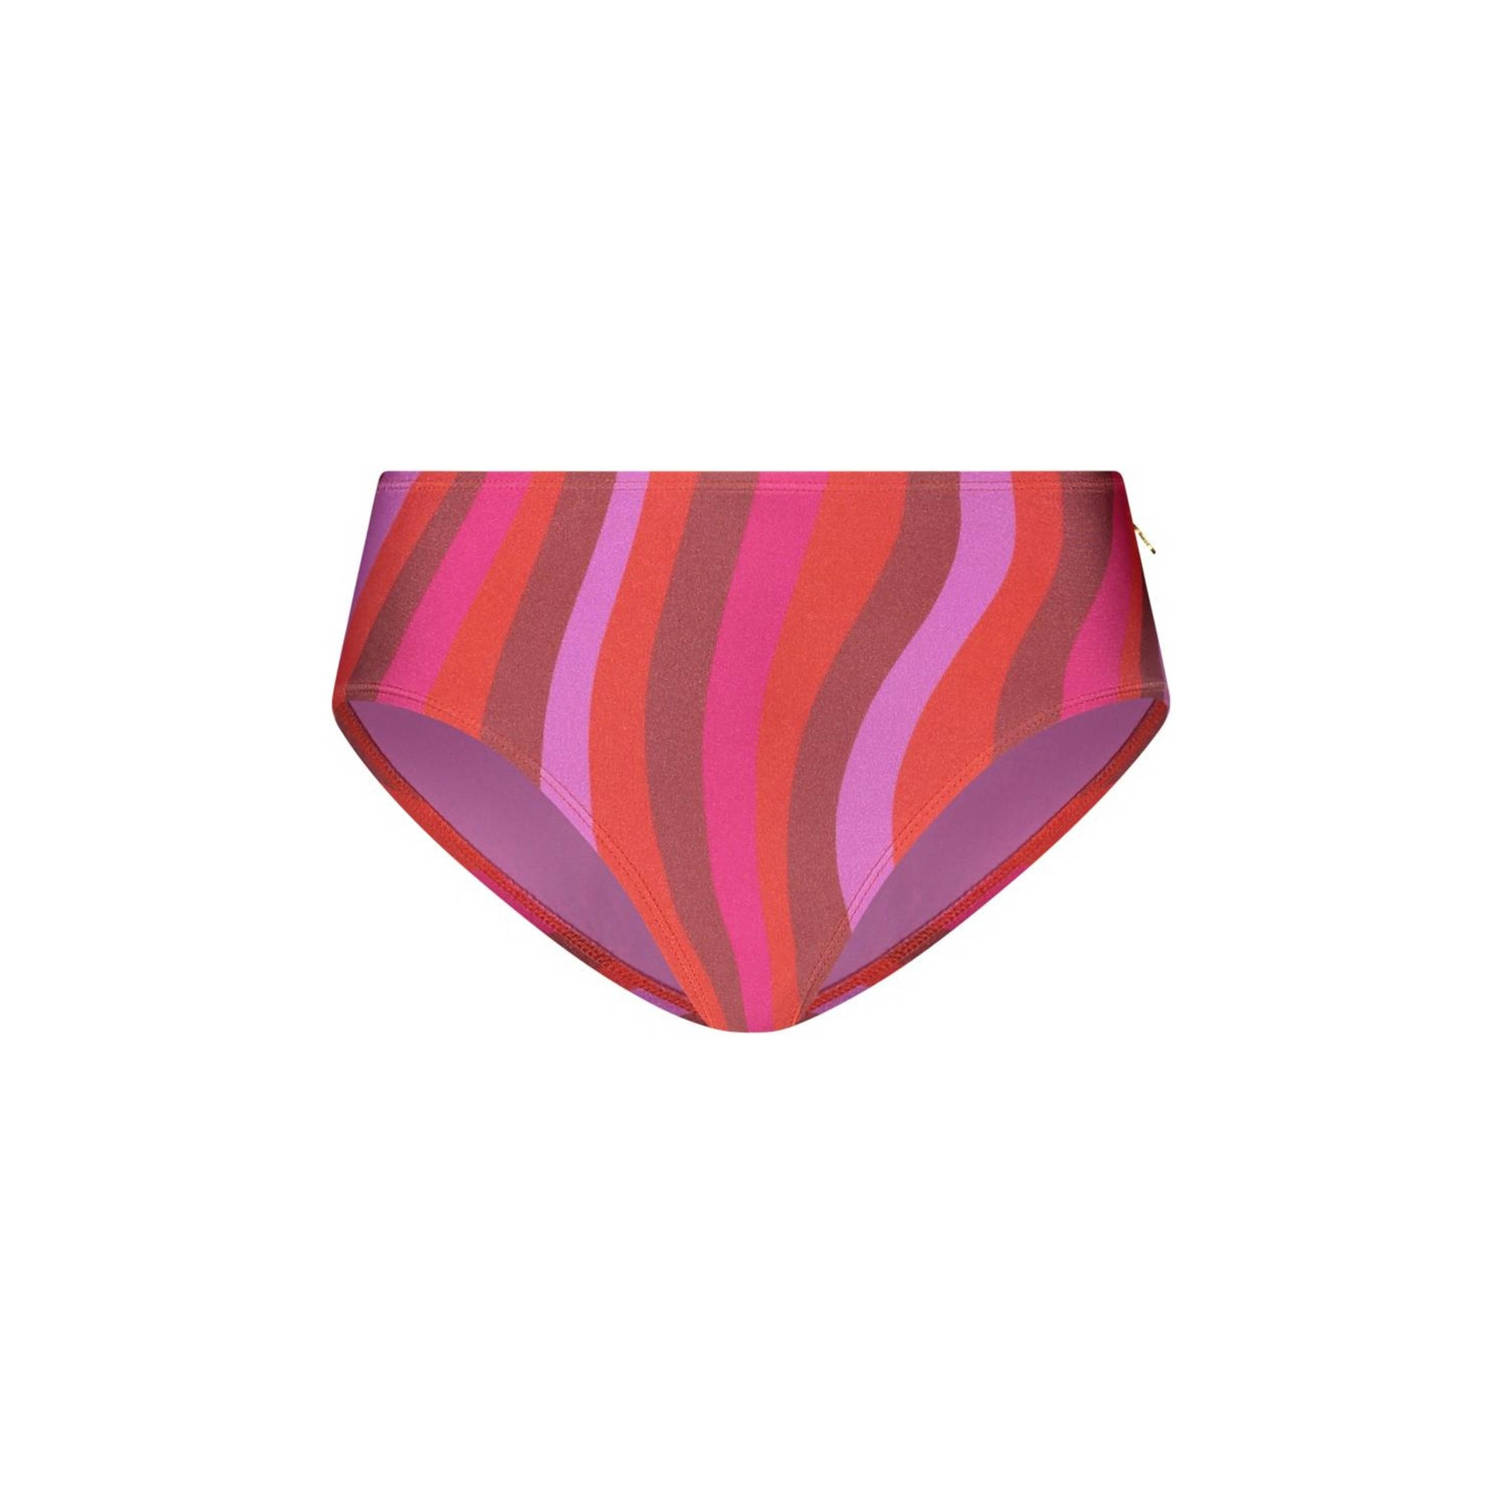 Ten Cate Beach TC WOW bikinibrokje rood roze oranje